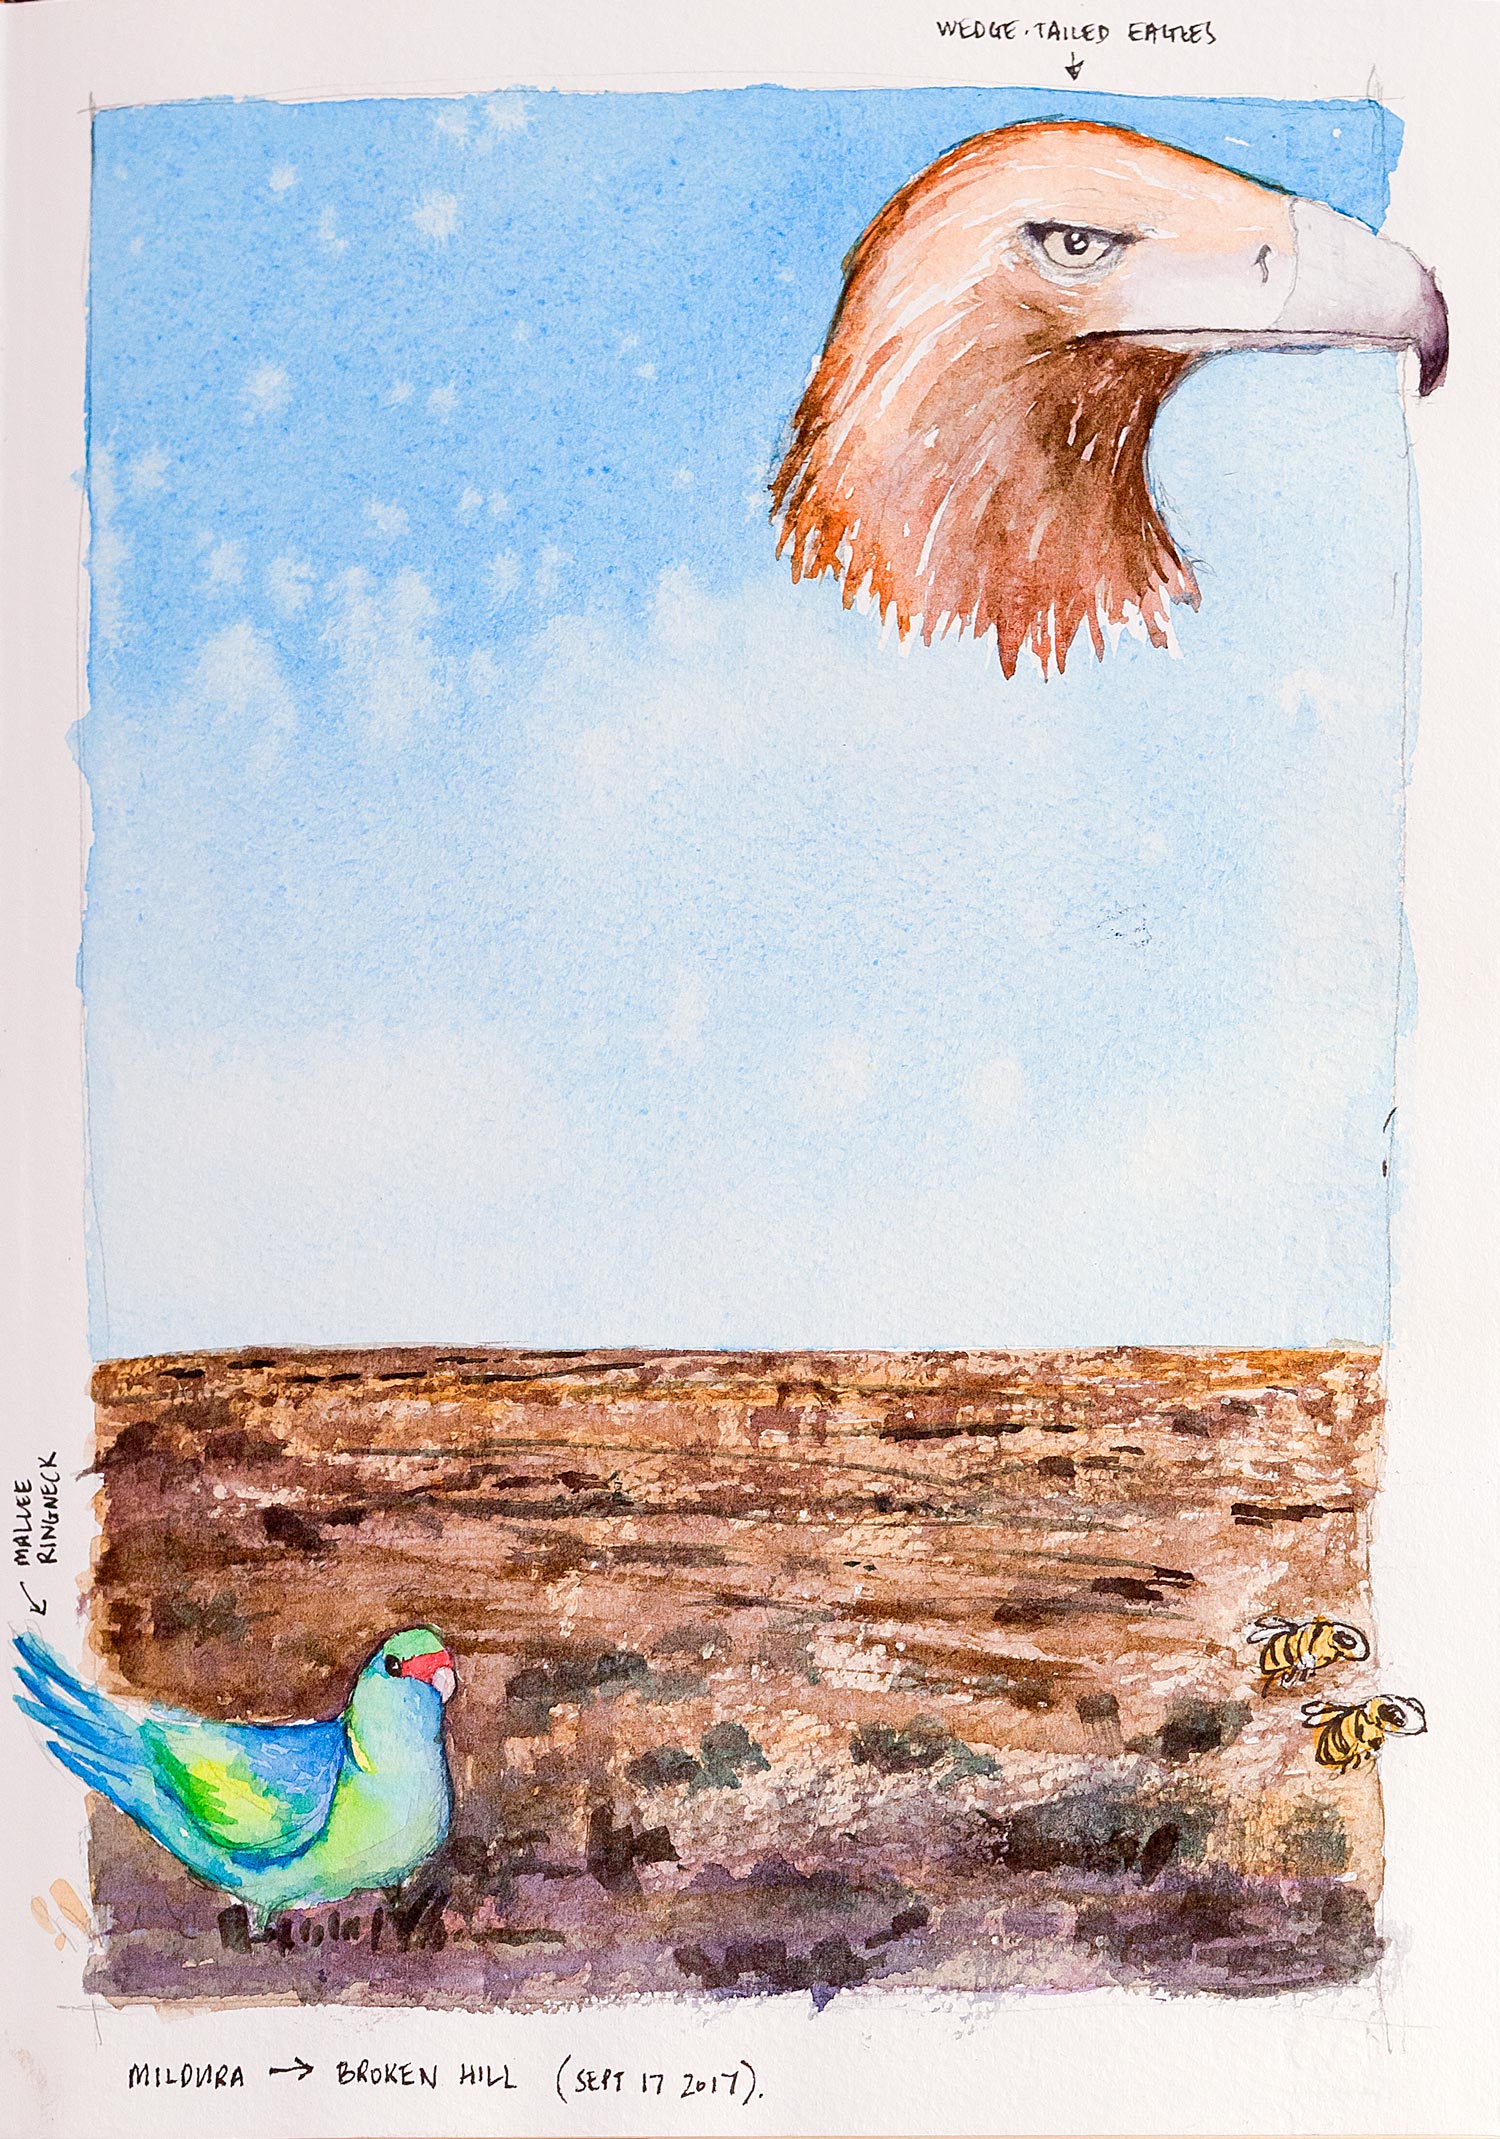 A sketch of the Australian desert with birds